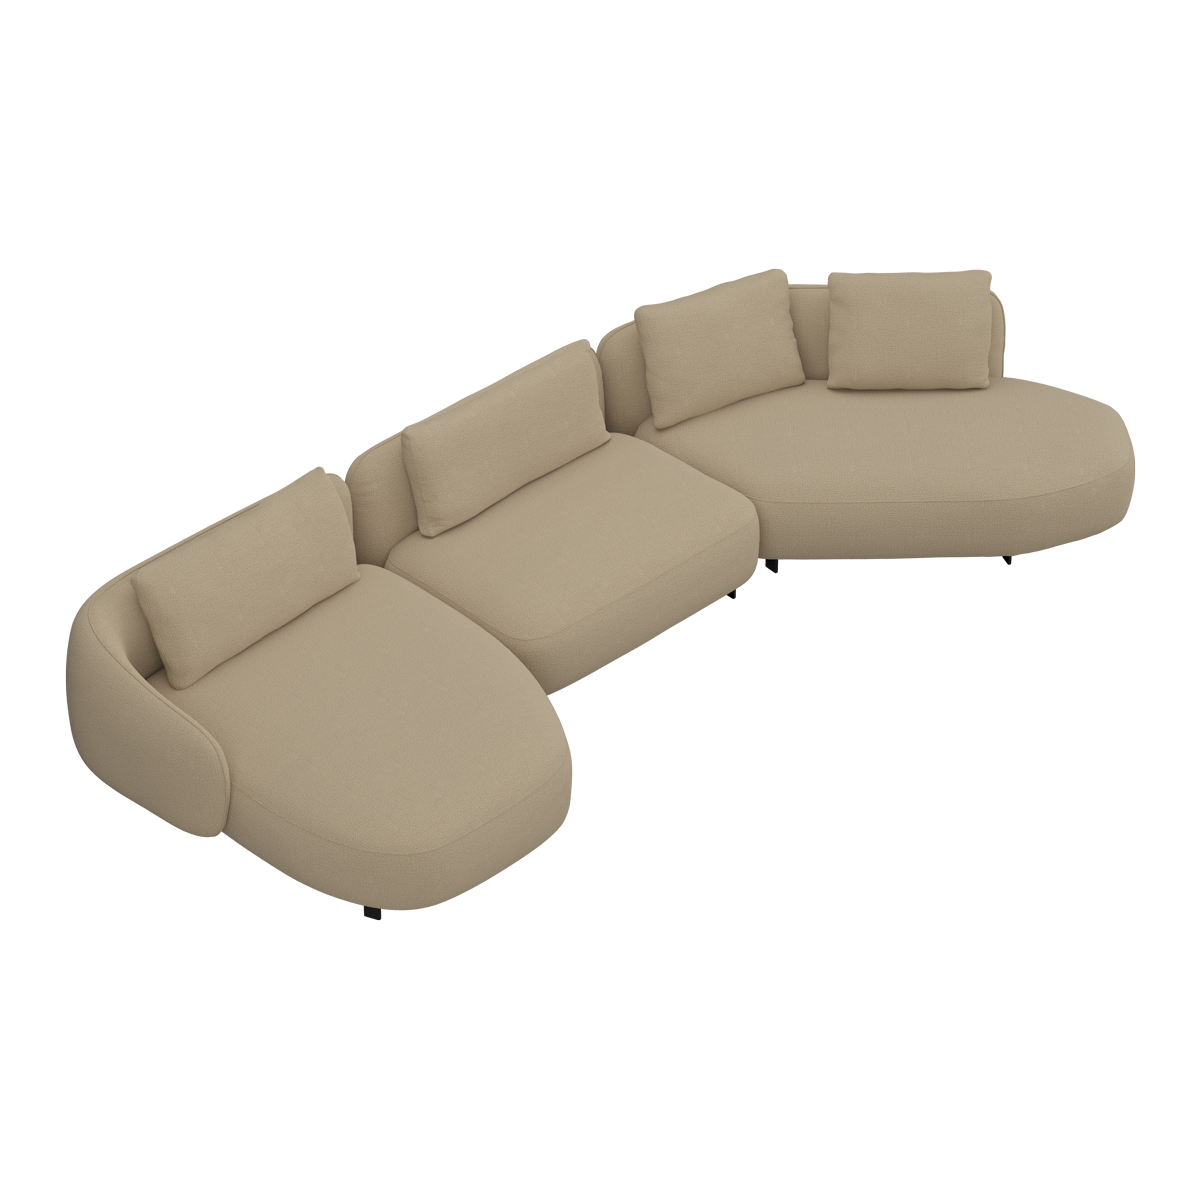 Orca, Curved Sectional Sofa by Furninova